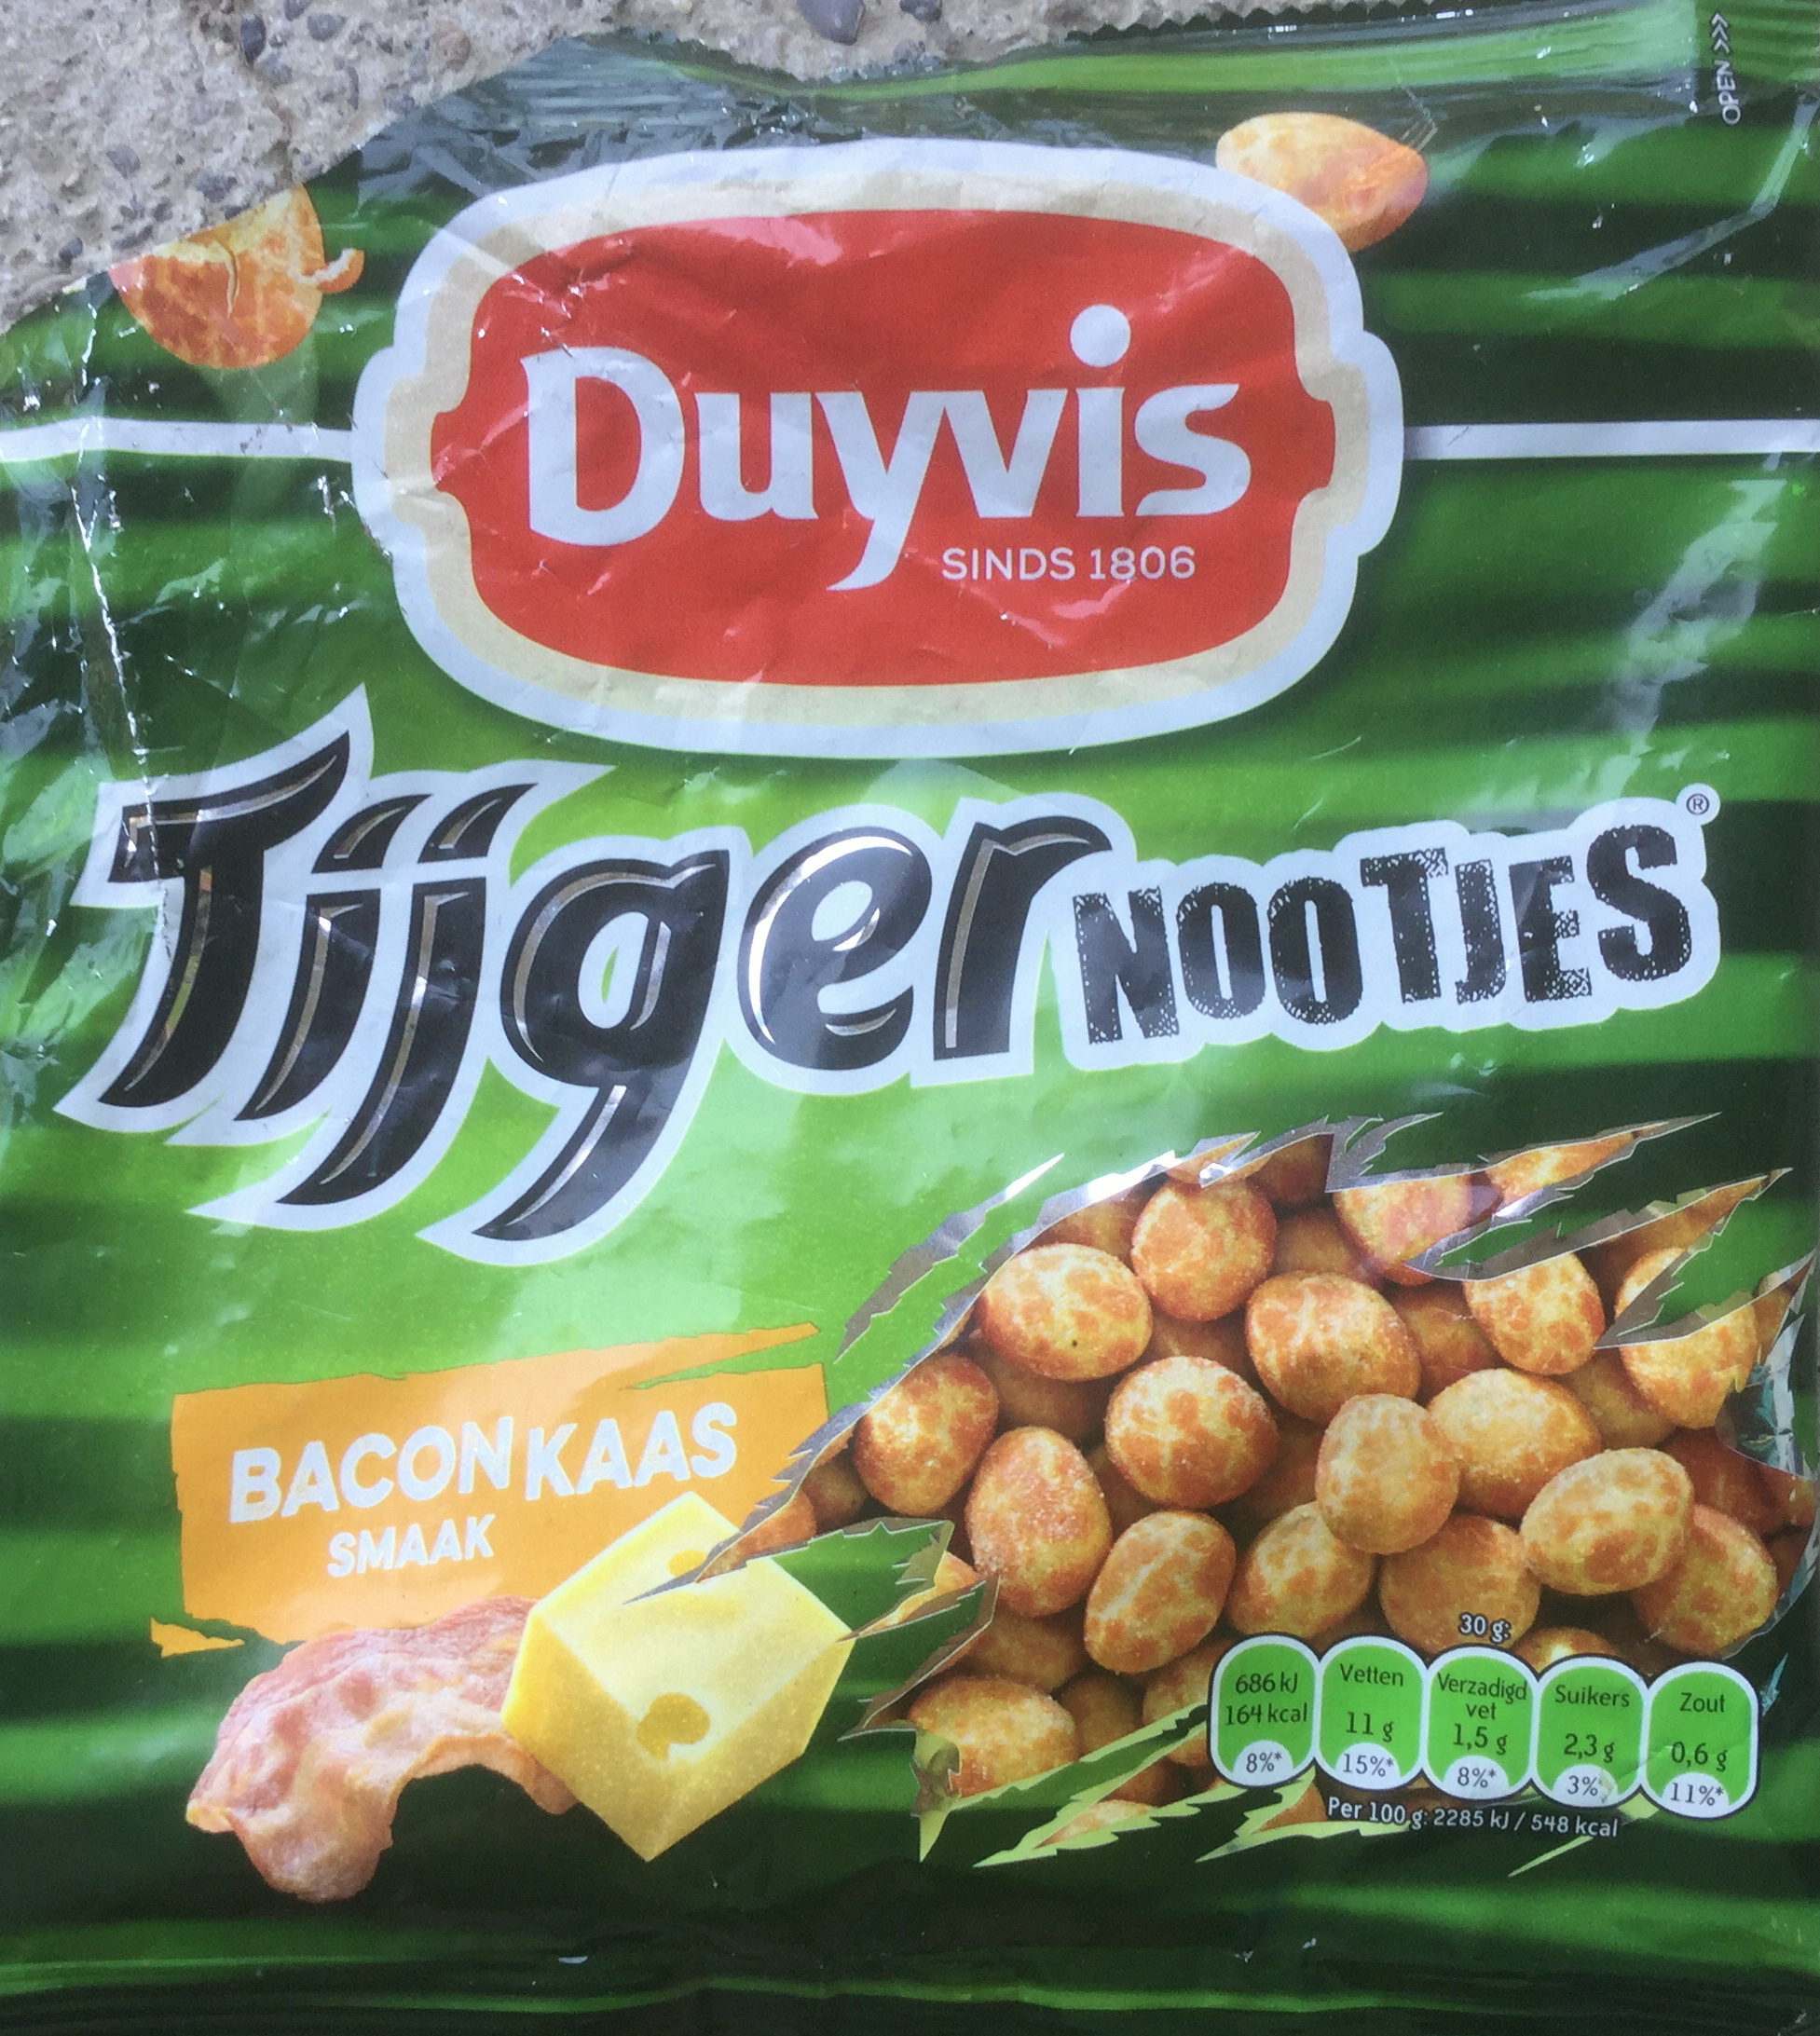 Tijgernootjes bacon kaas smaak - Producto - nl